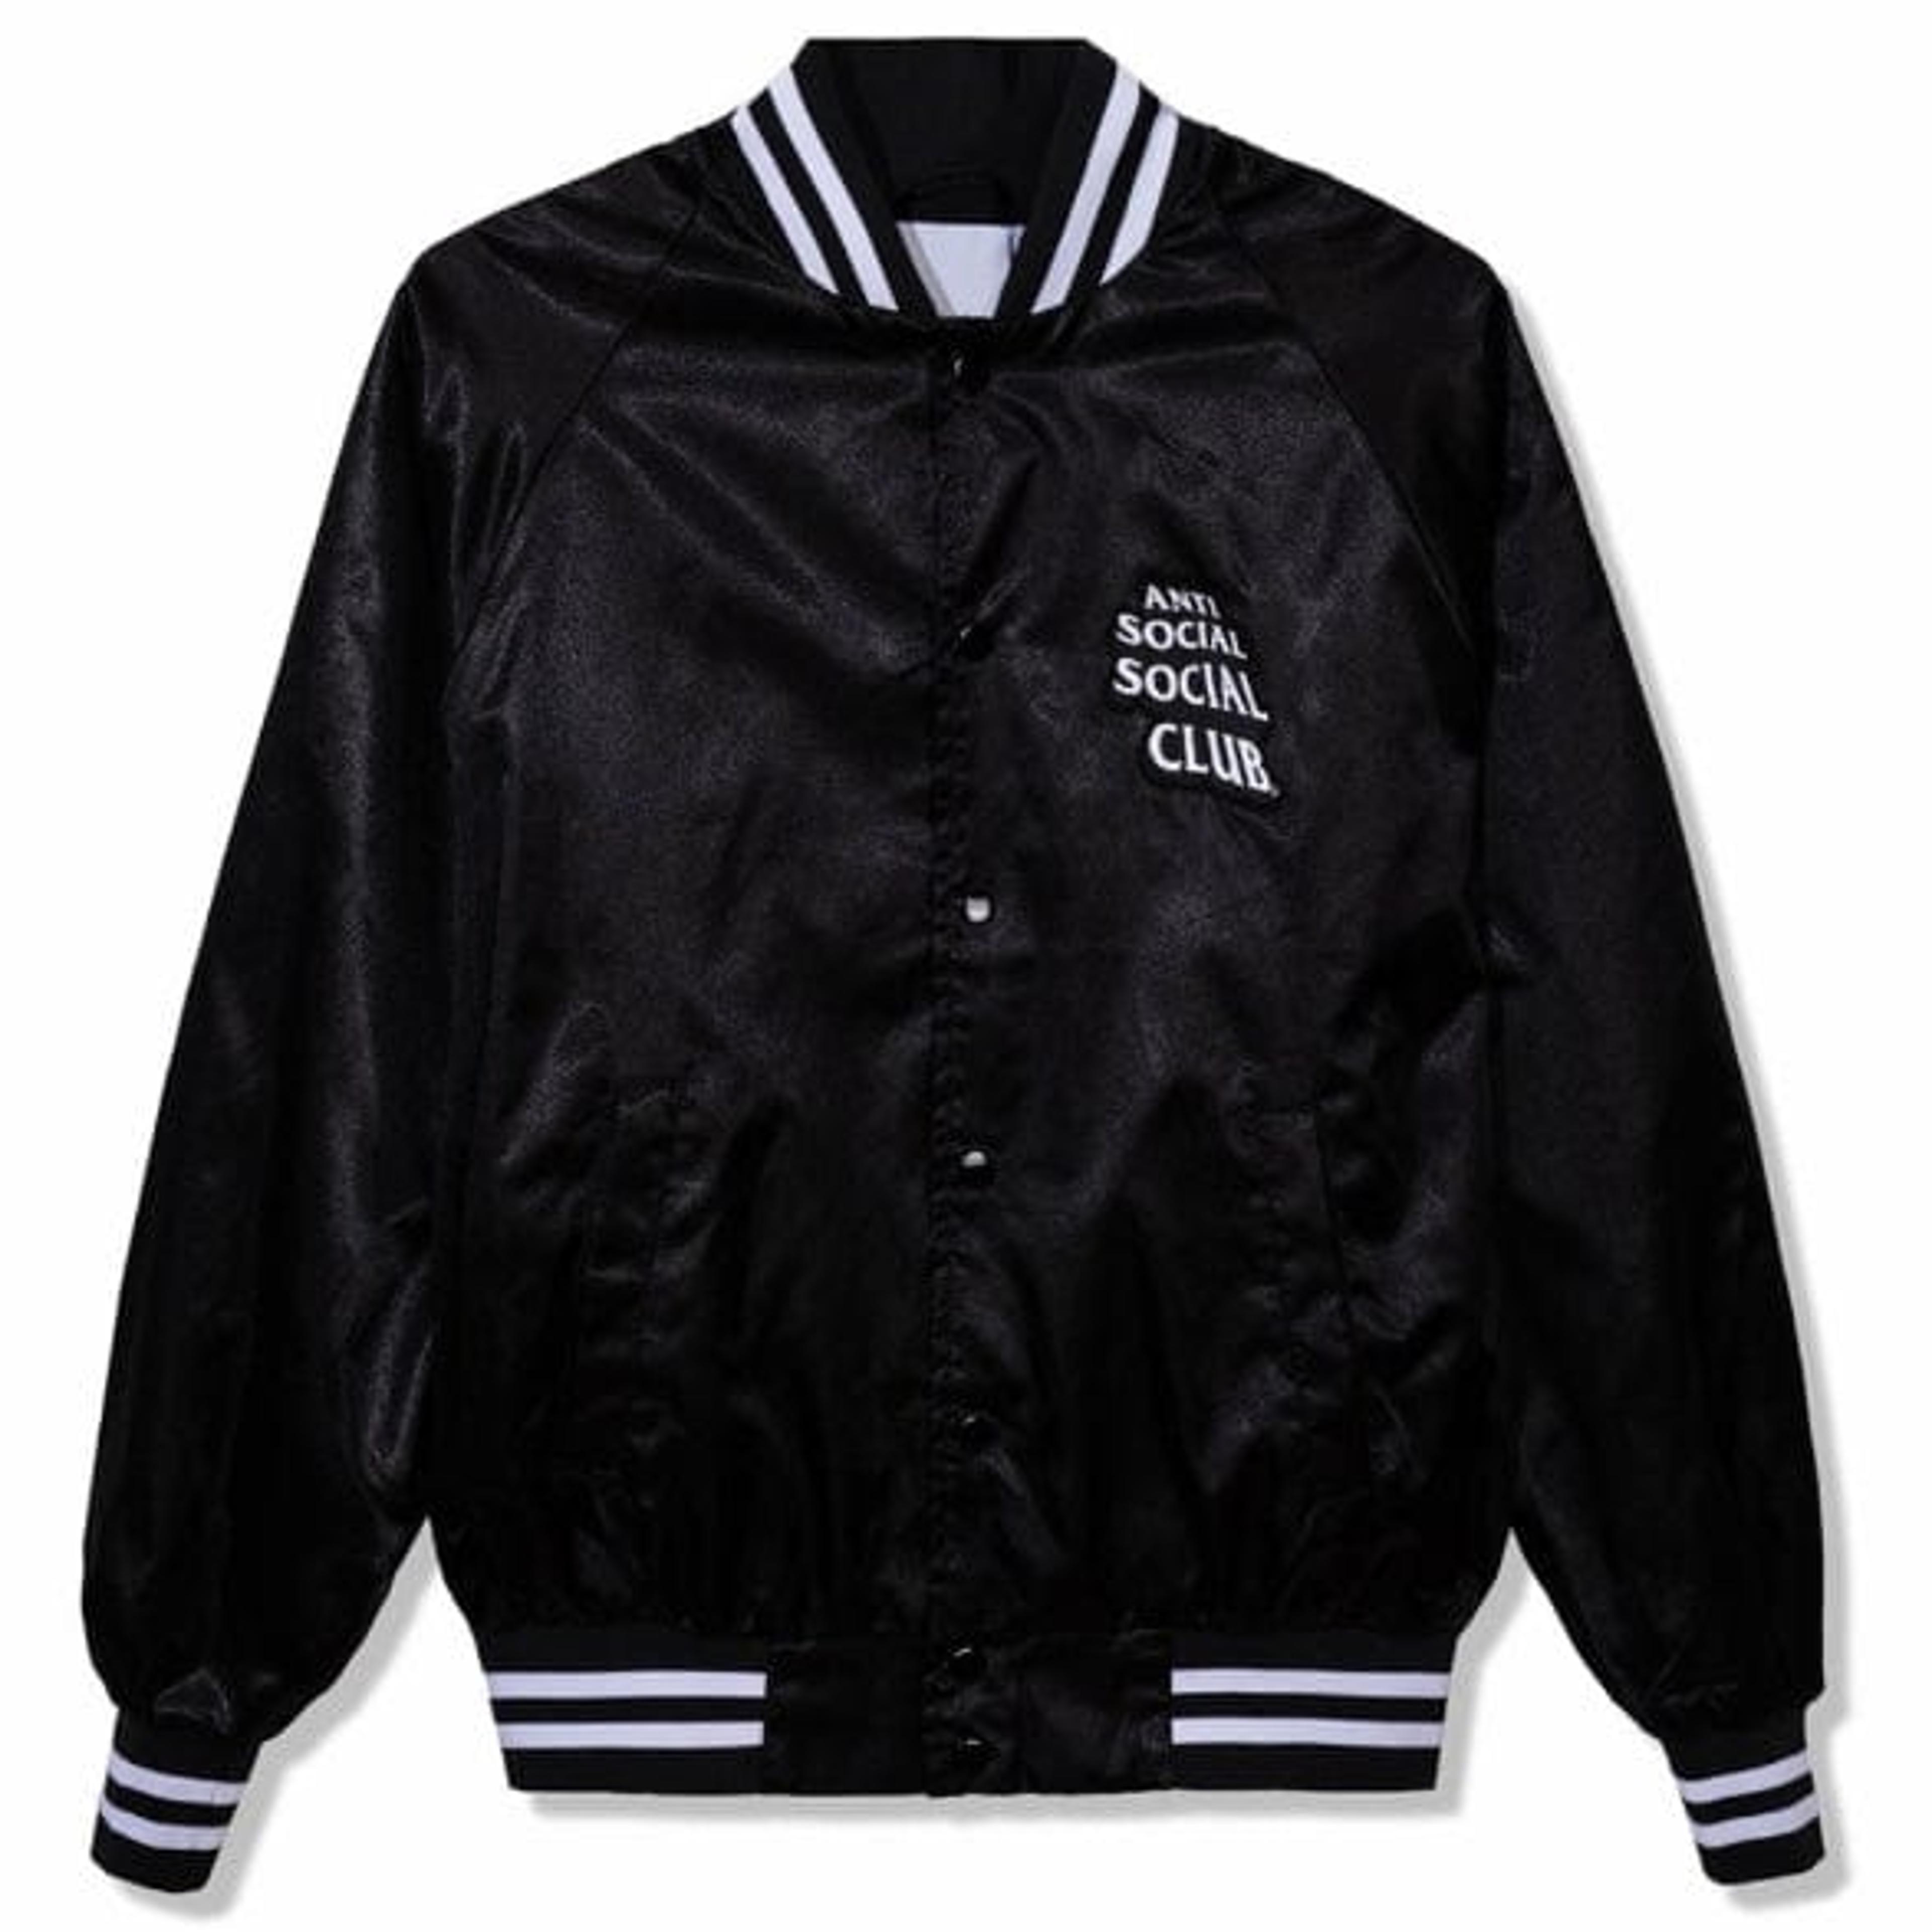 Anti Social Social Club Souvenir Jacket (Black)